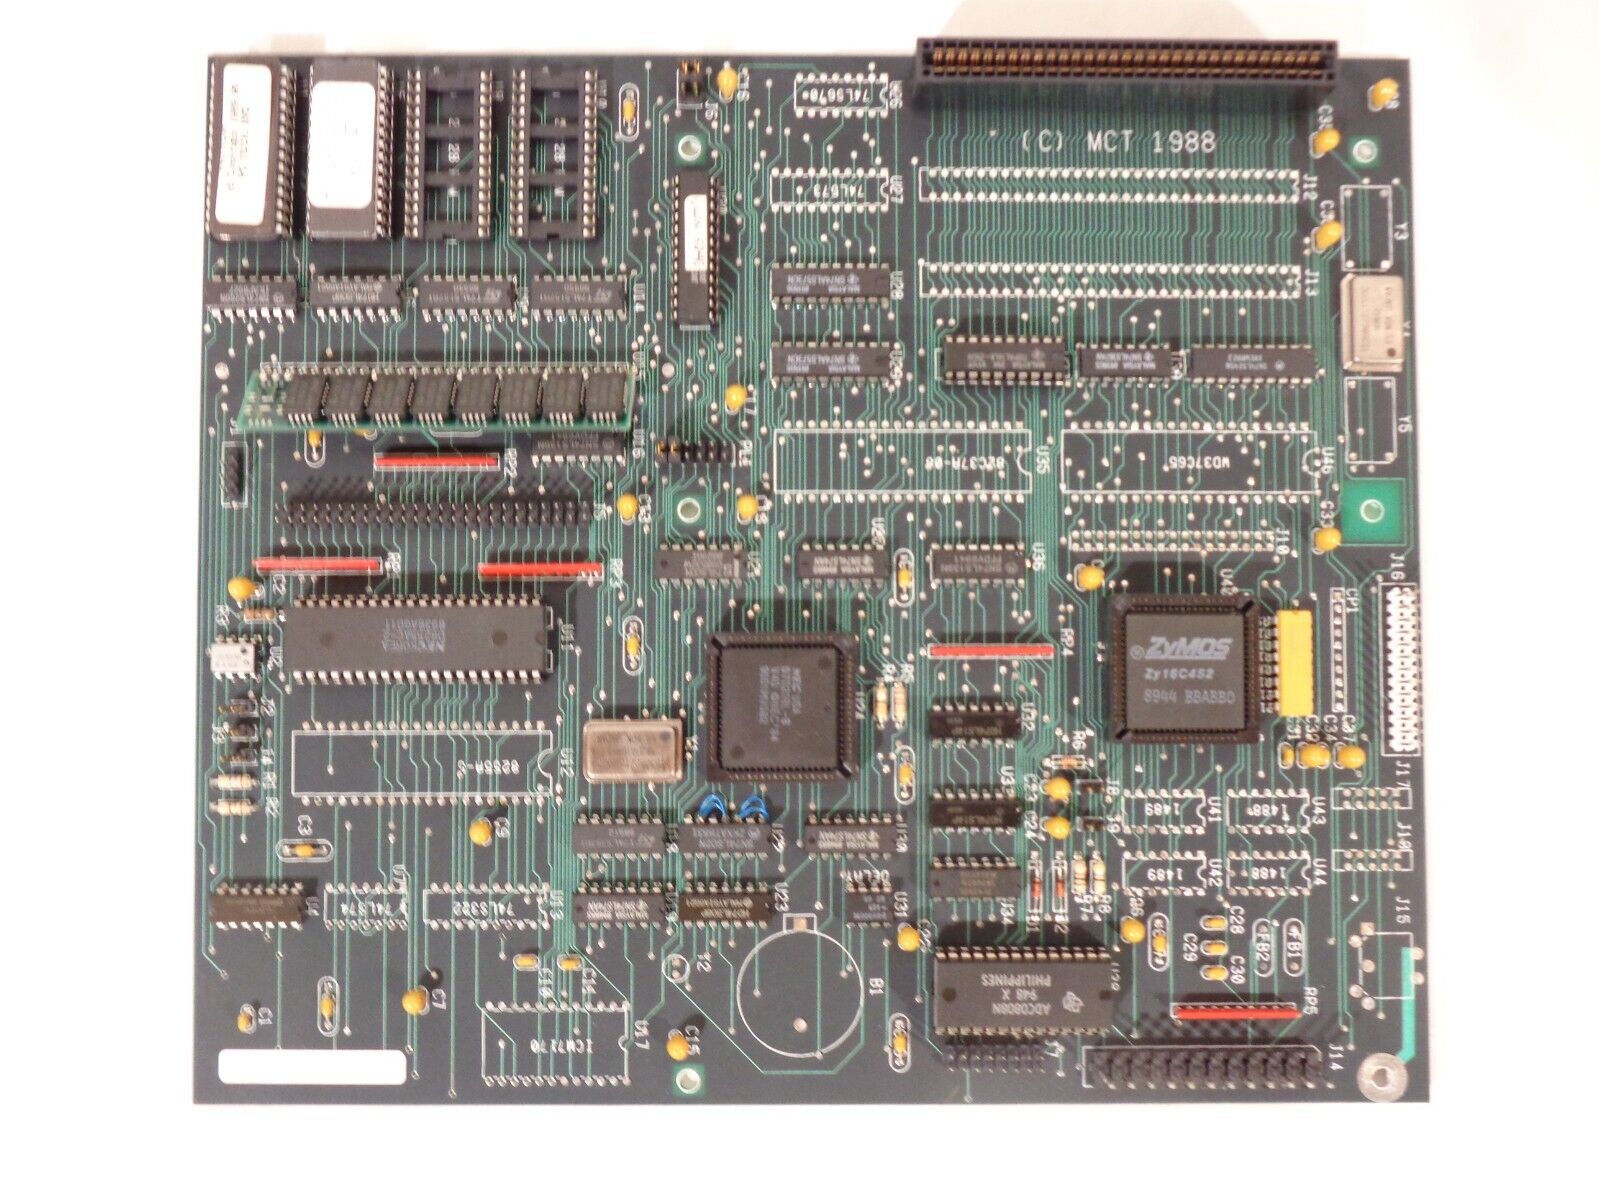 Vintage 1988 MCT PC Motherboard NEC D70208L-8 16 Bit CPU Untested Parts Repair